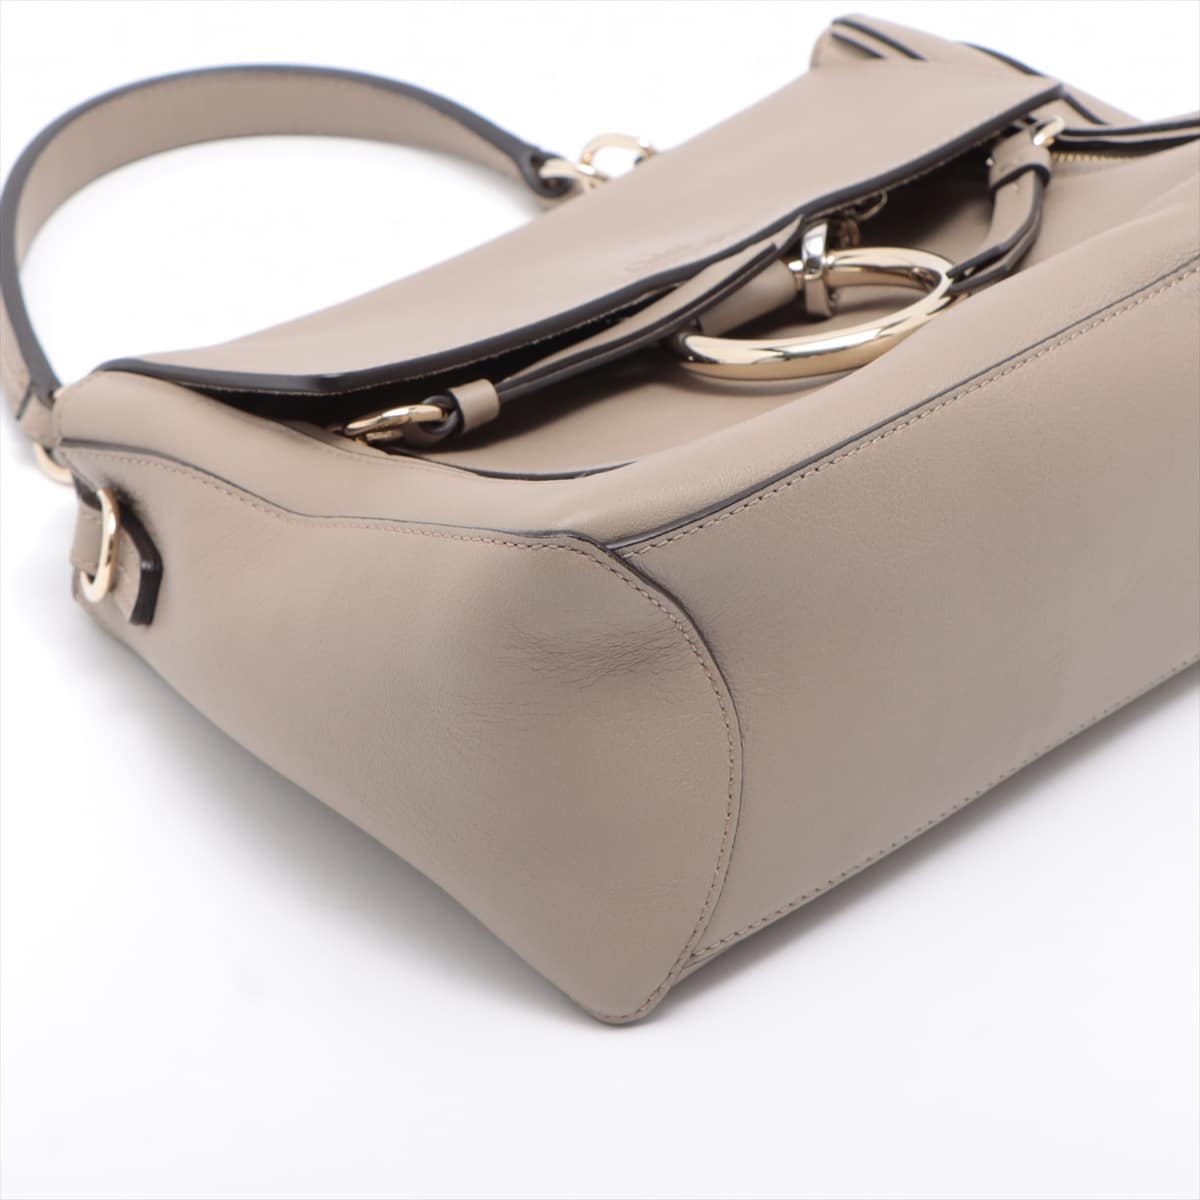 Chloe Fayday Leather 2way handbag Beige